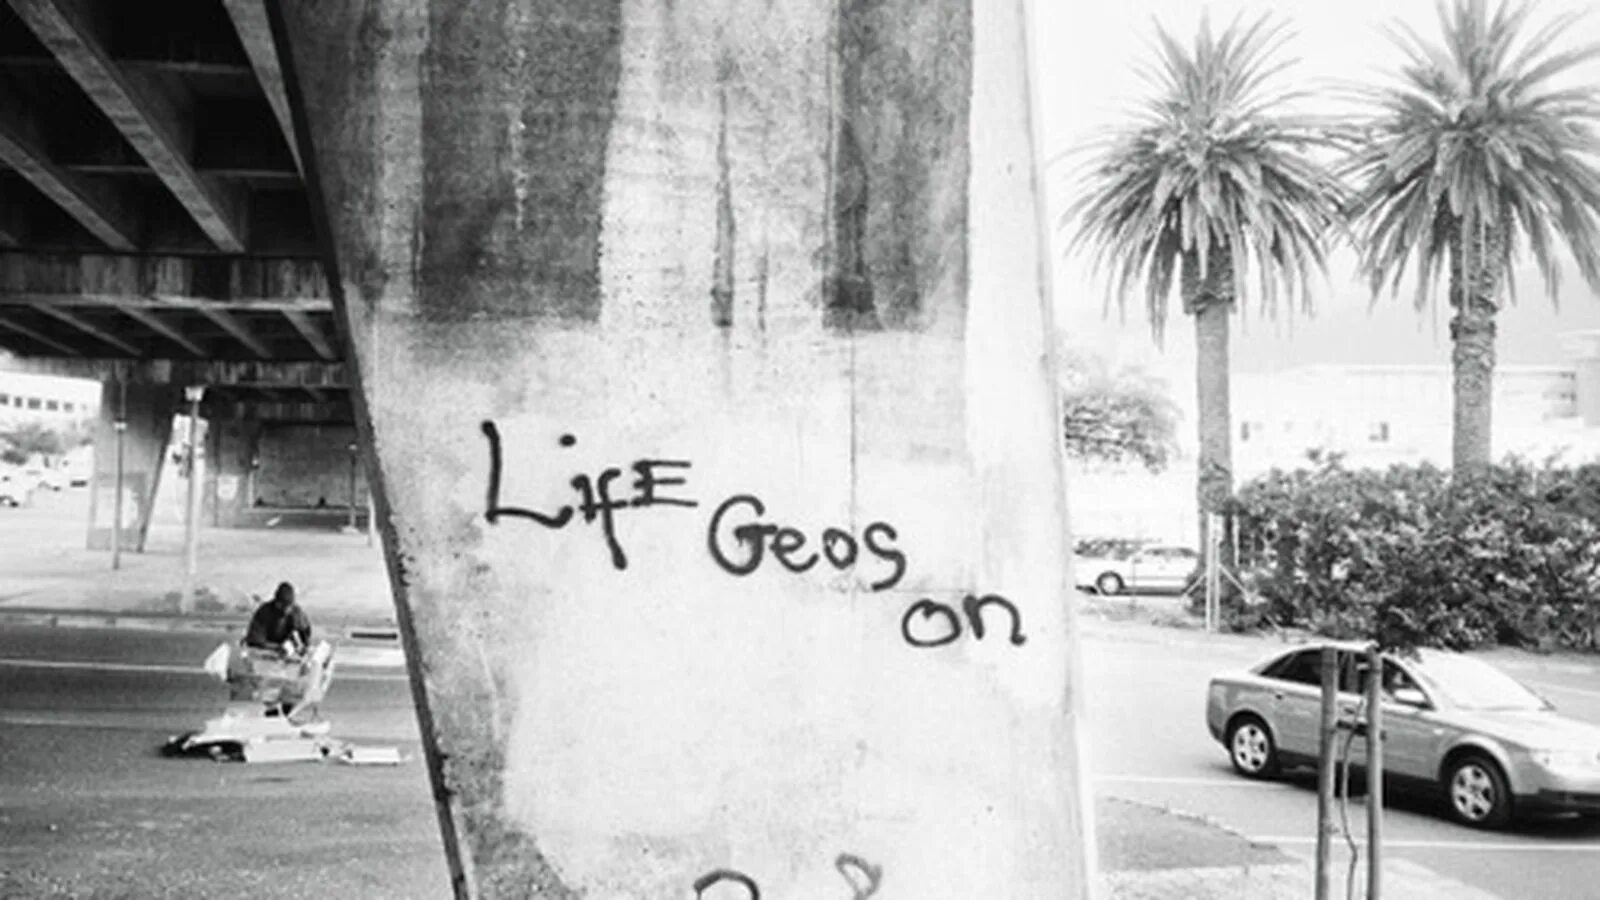 Life goes only. Life goes on. Life goes on картинка. Life goes on обои на телефон. Life goes on надпись.